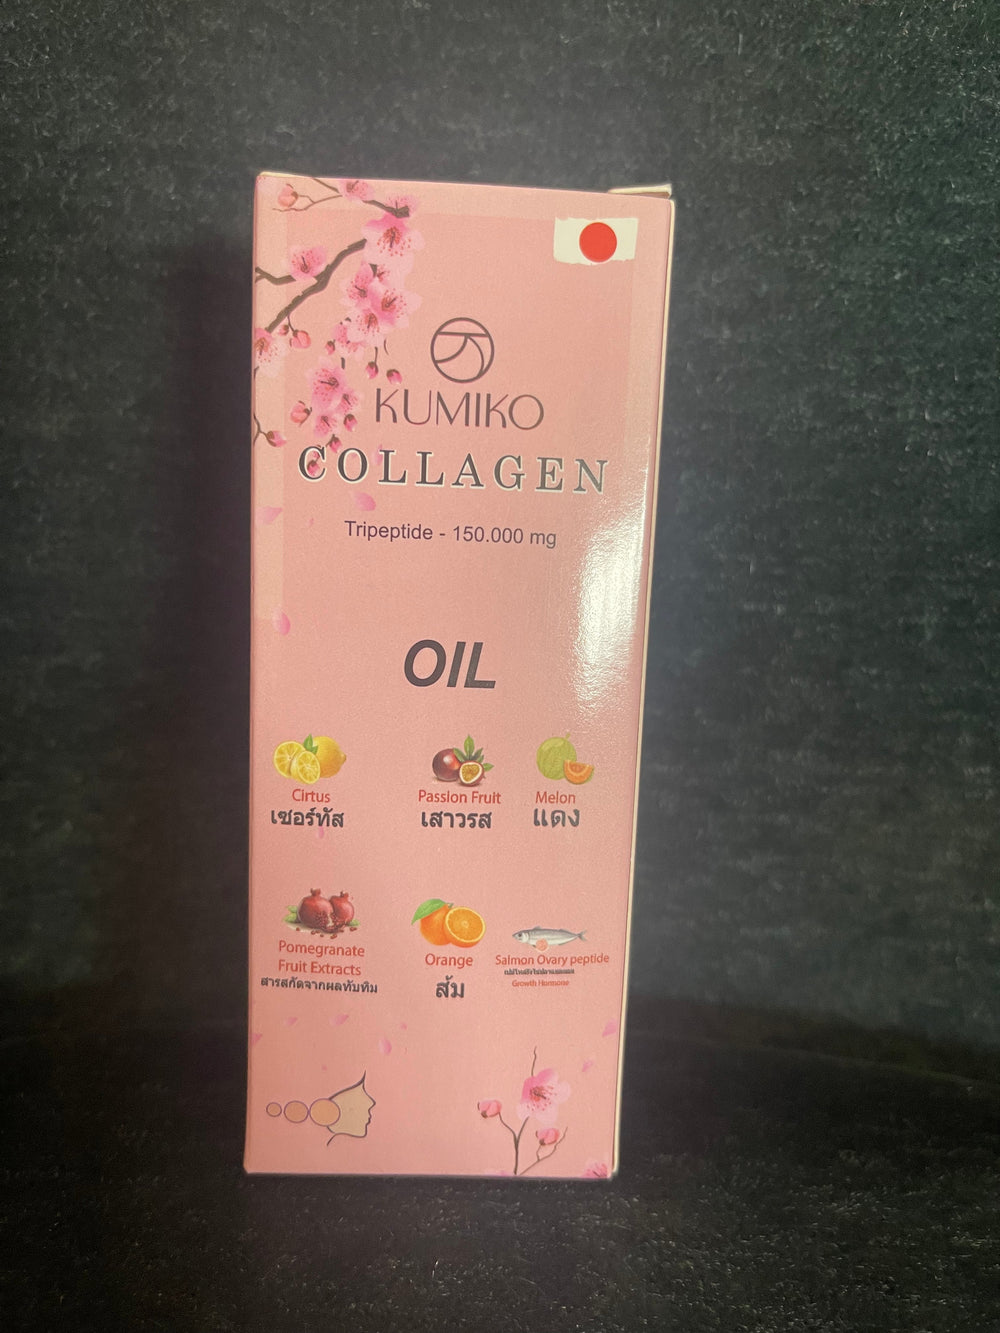 (Copie) Kumiko Collagen Oil Tripeptide 150,000 mg 125 ml Congo